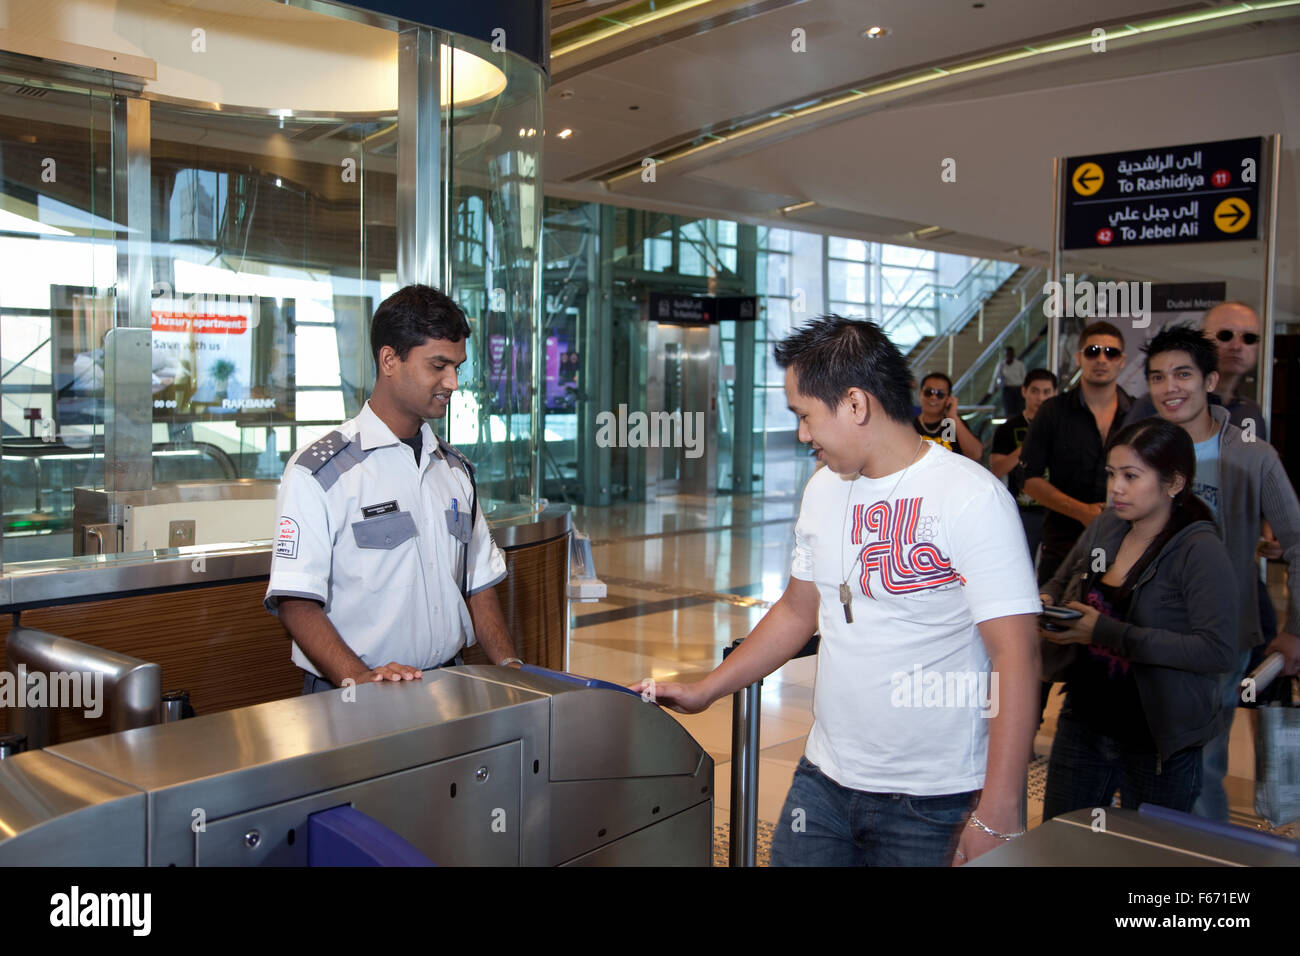 Station staff assist passengers on the Dubai Metro Stock Photo